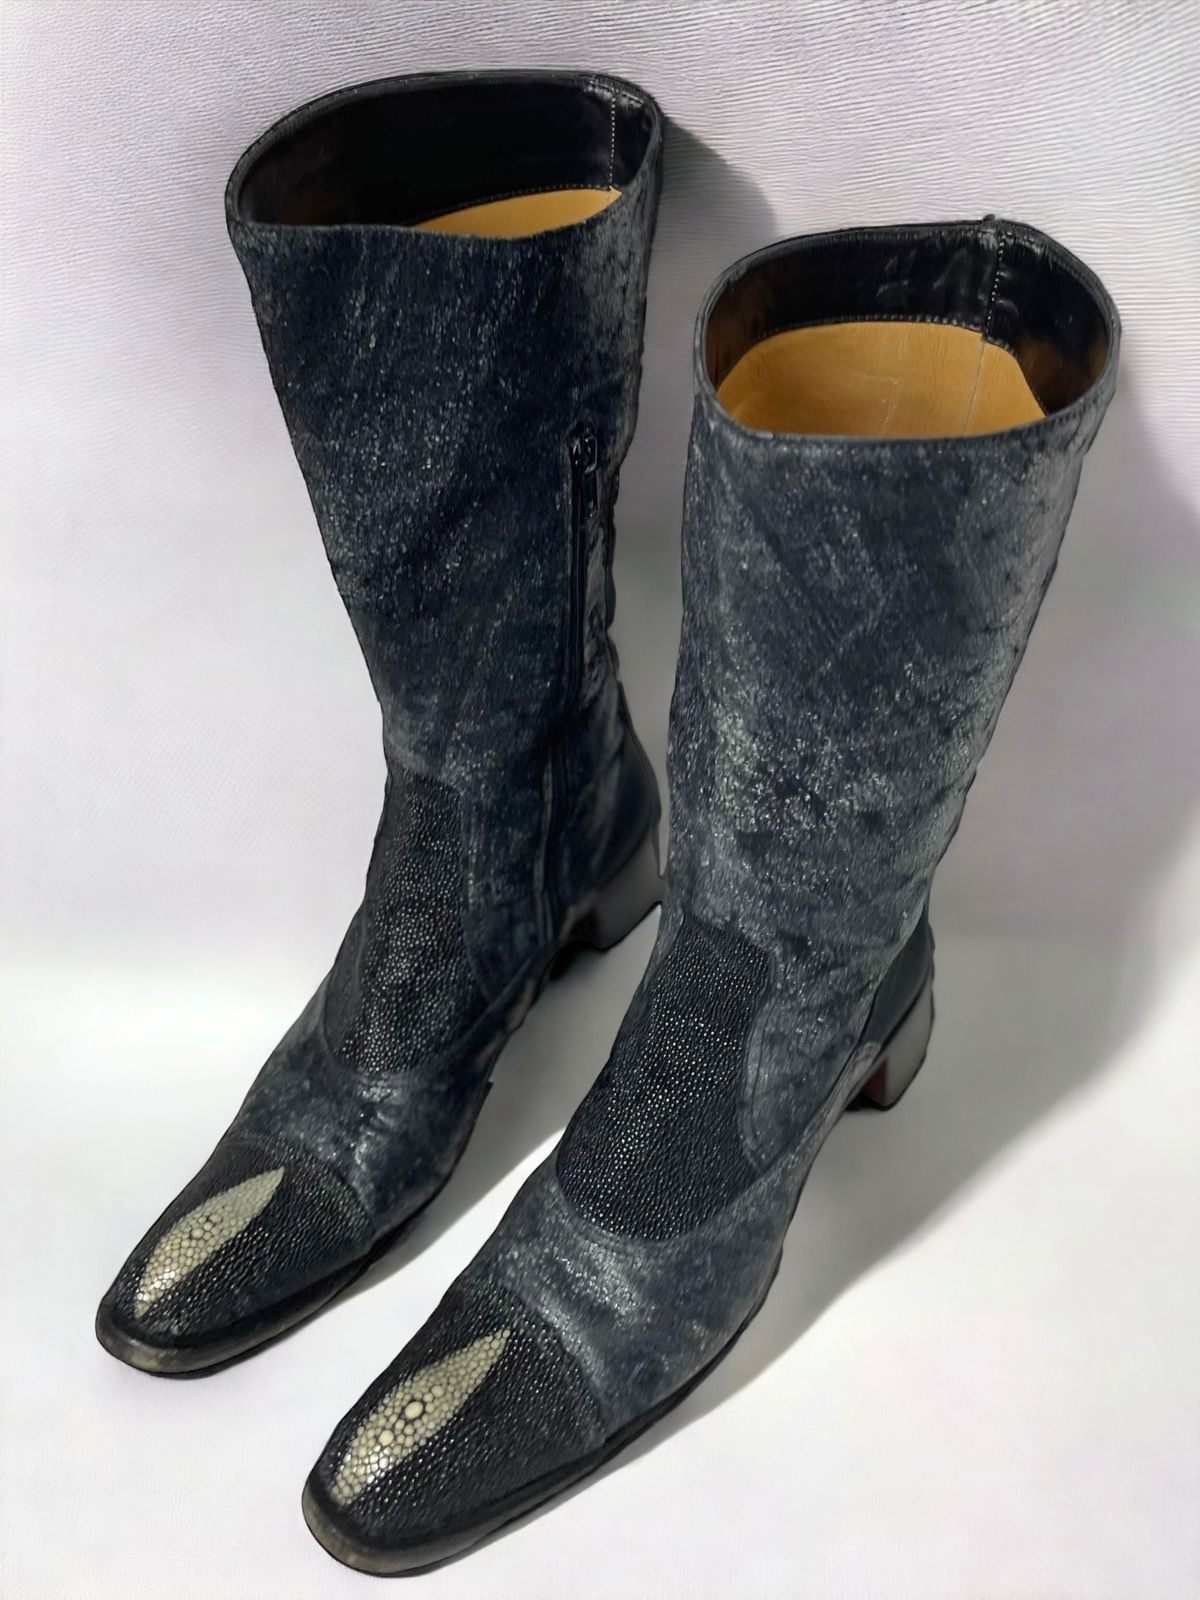 Gianni Barbato Vintage Gianni Barbato cowboy western Boots genuine leather Size US 6 / IT 36 - 1 Preview